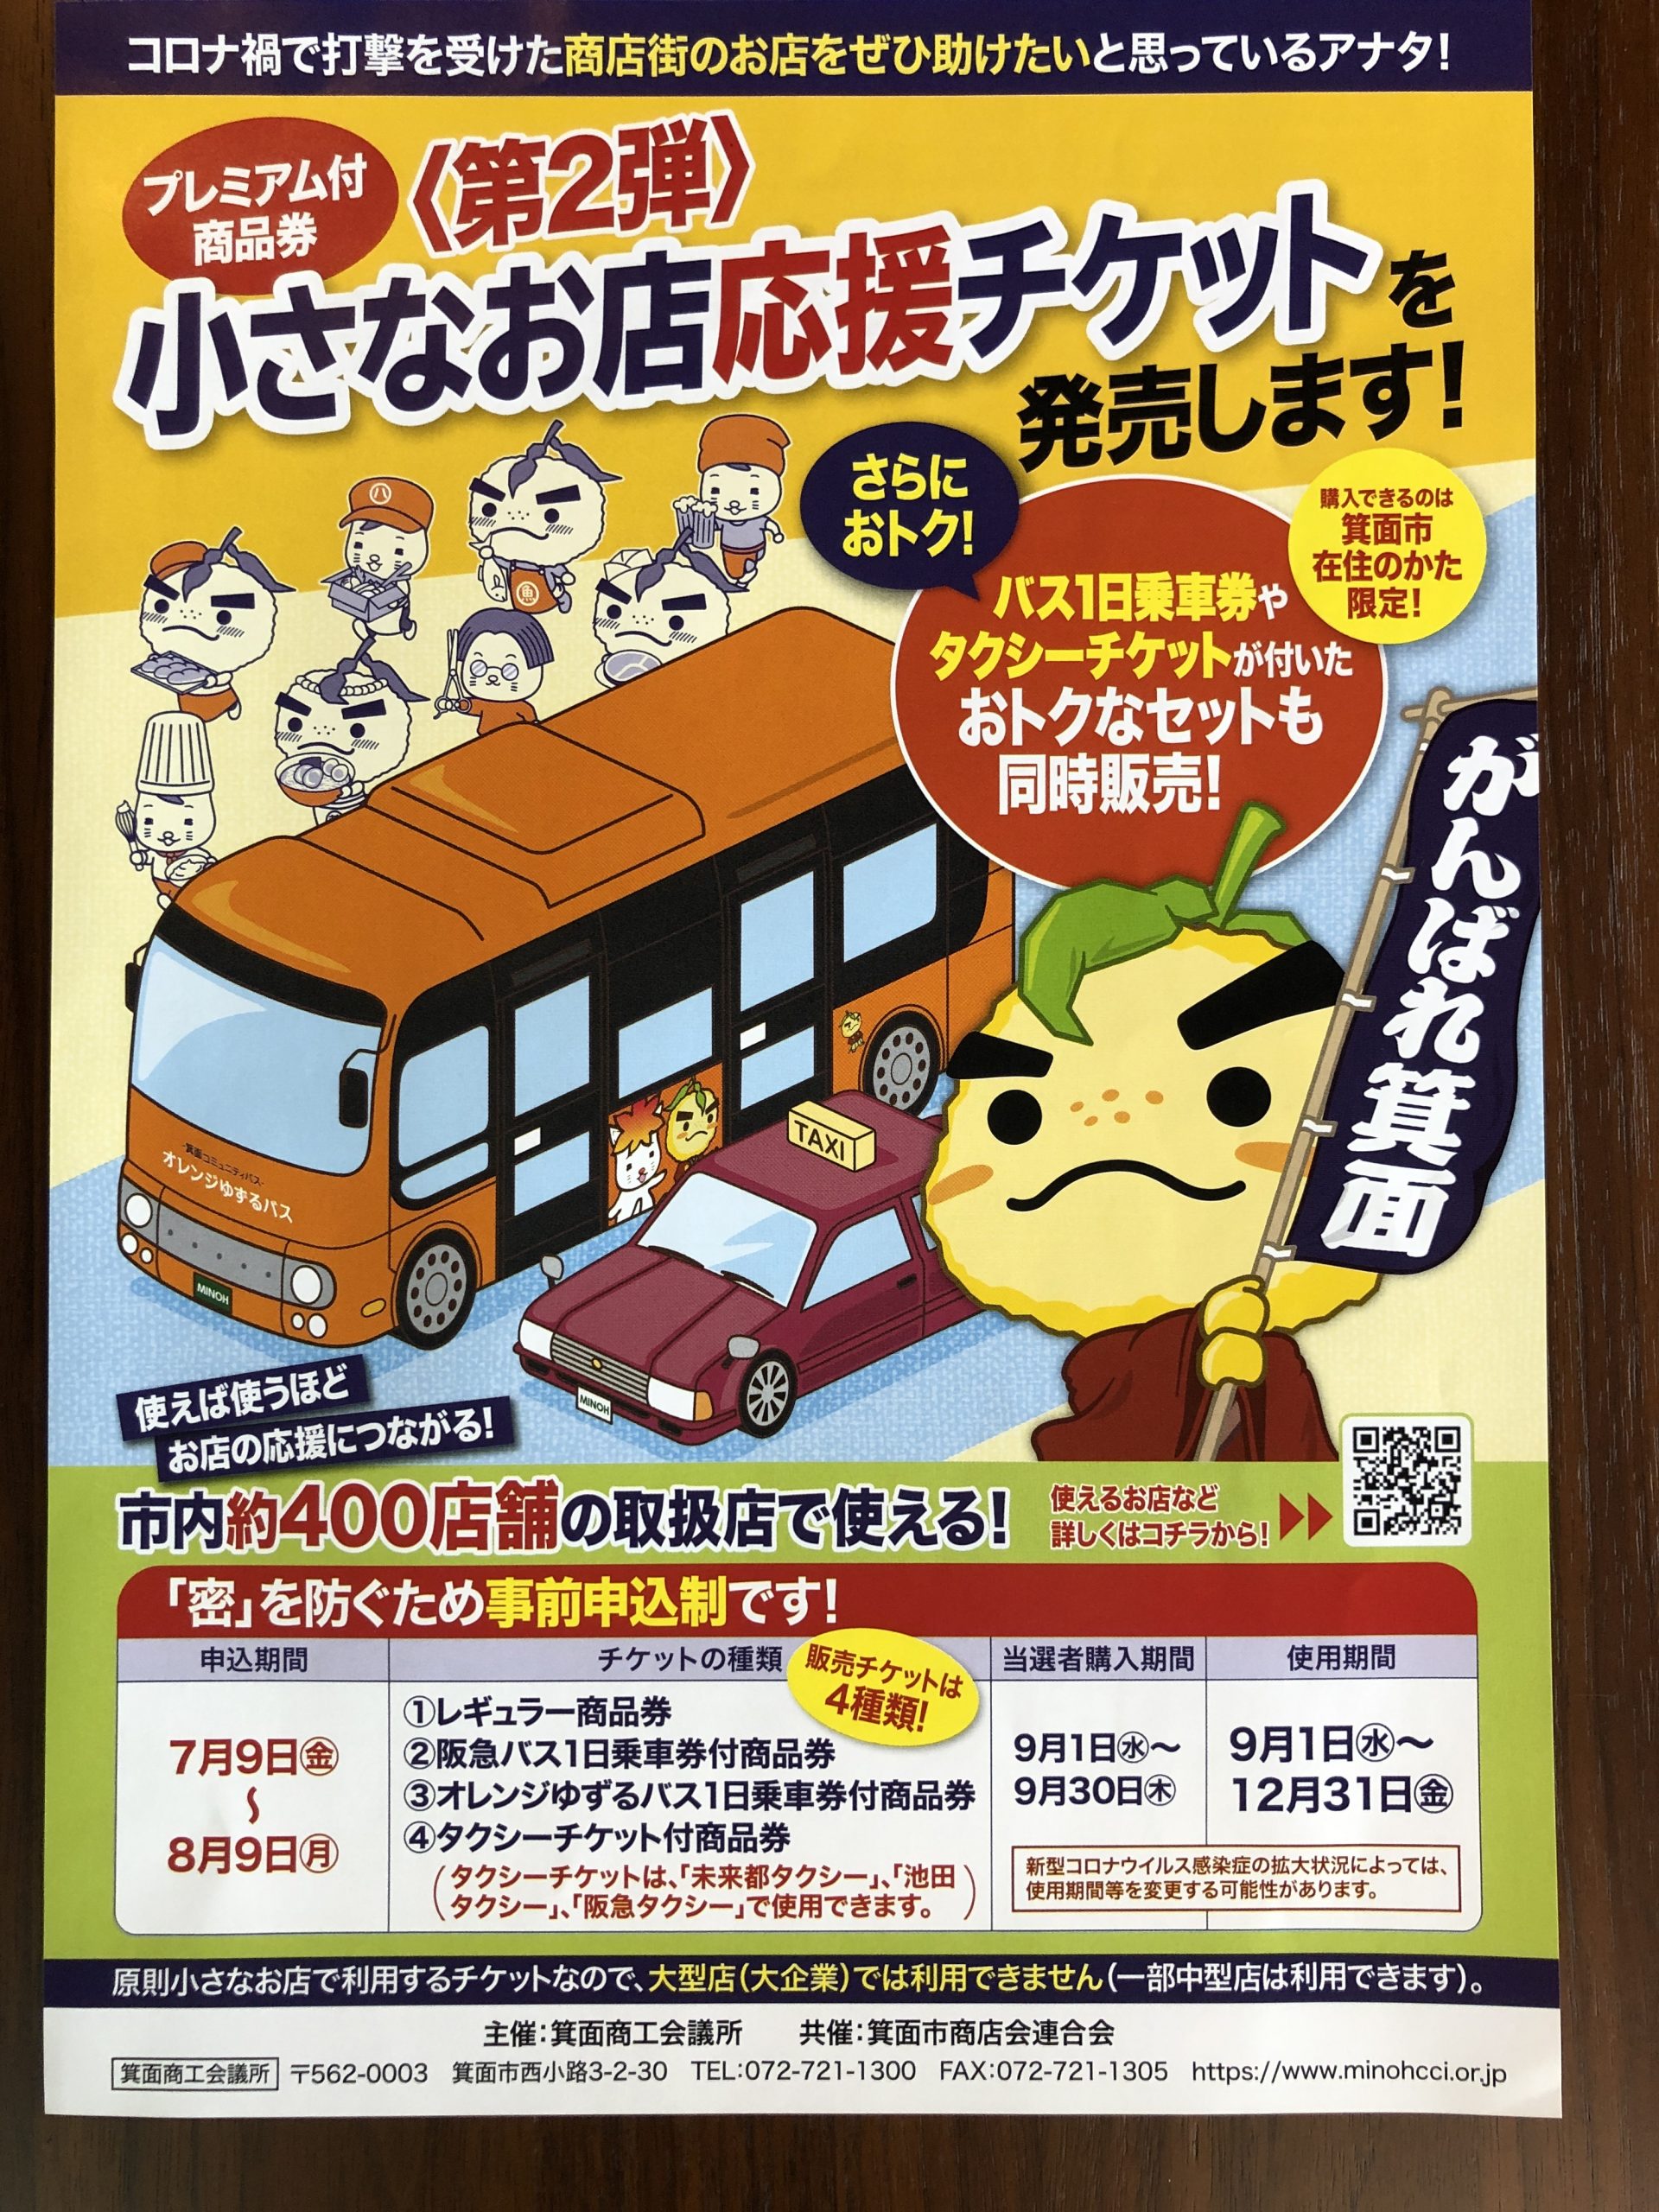 minoh-ticket-poster